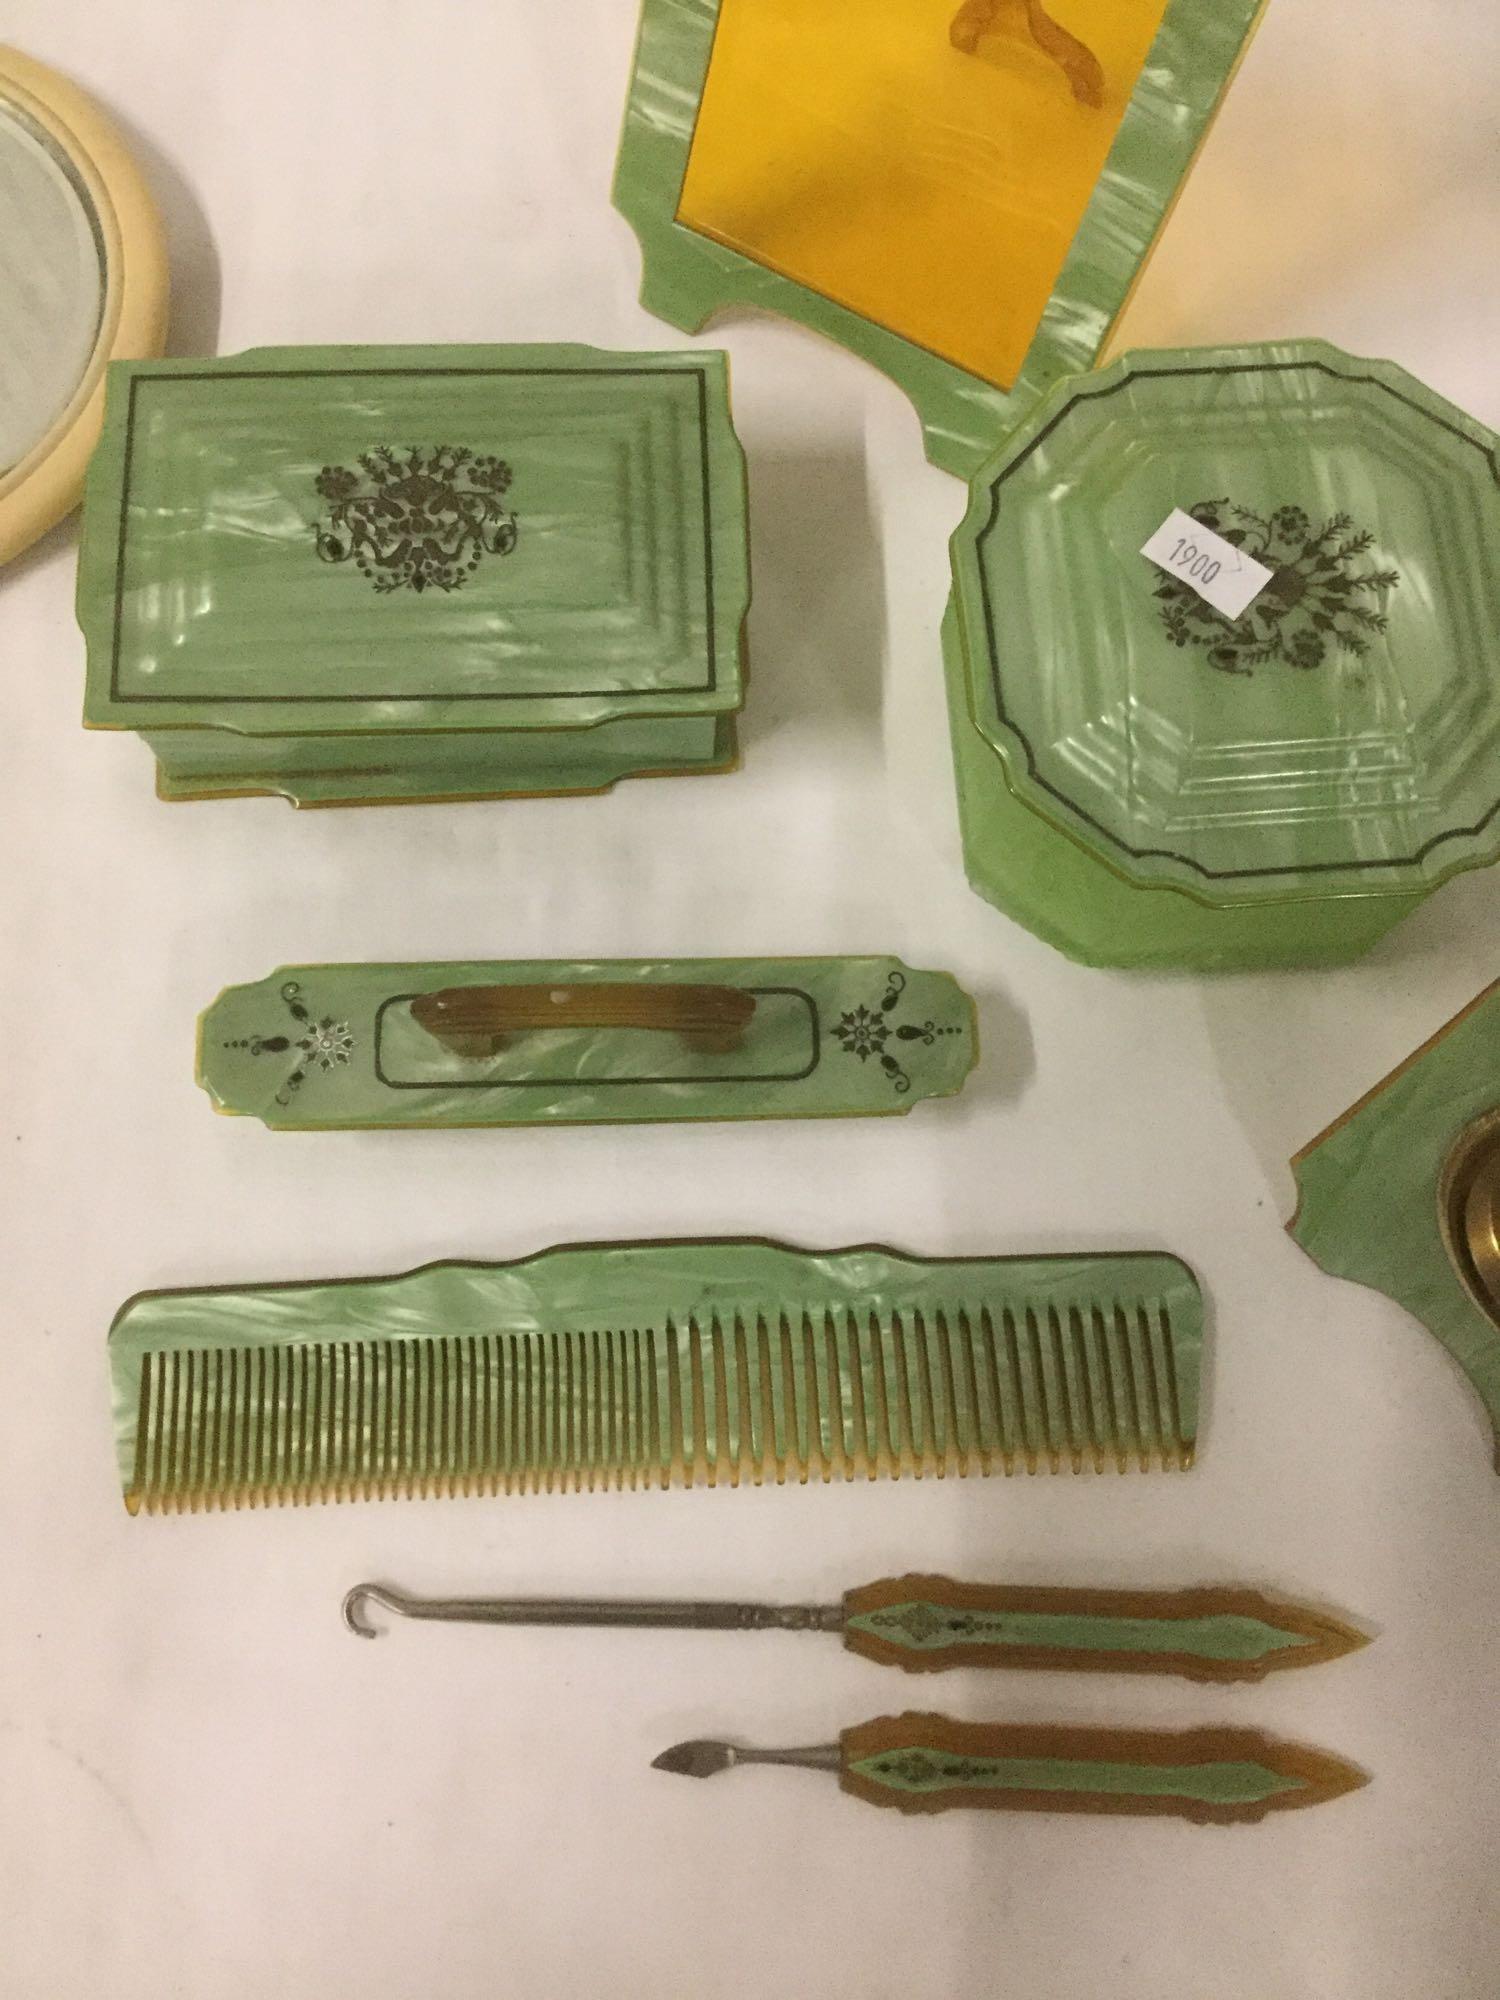 Antique art deco bakelite vanity set incl. frame, clock, comb, picks, mirror